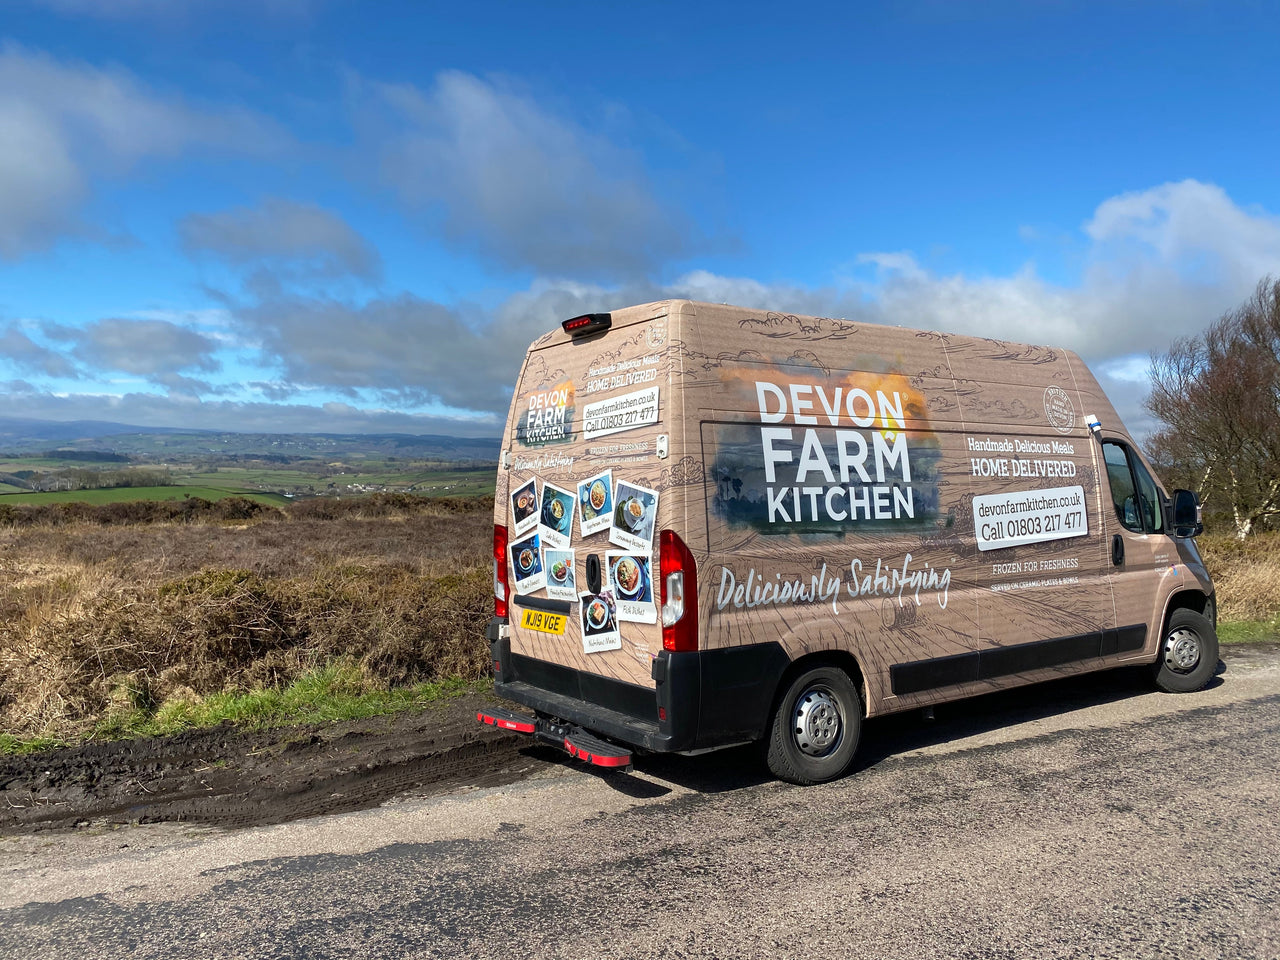 Devon Farm Kitchen makes history with revolutionary eco approach - Devon Farm Kitchen